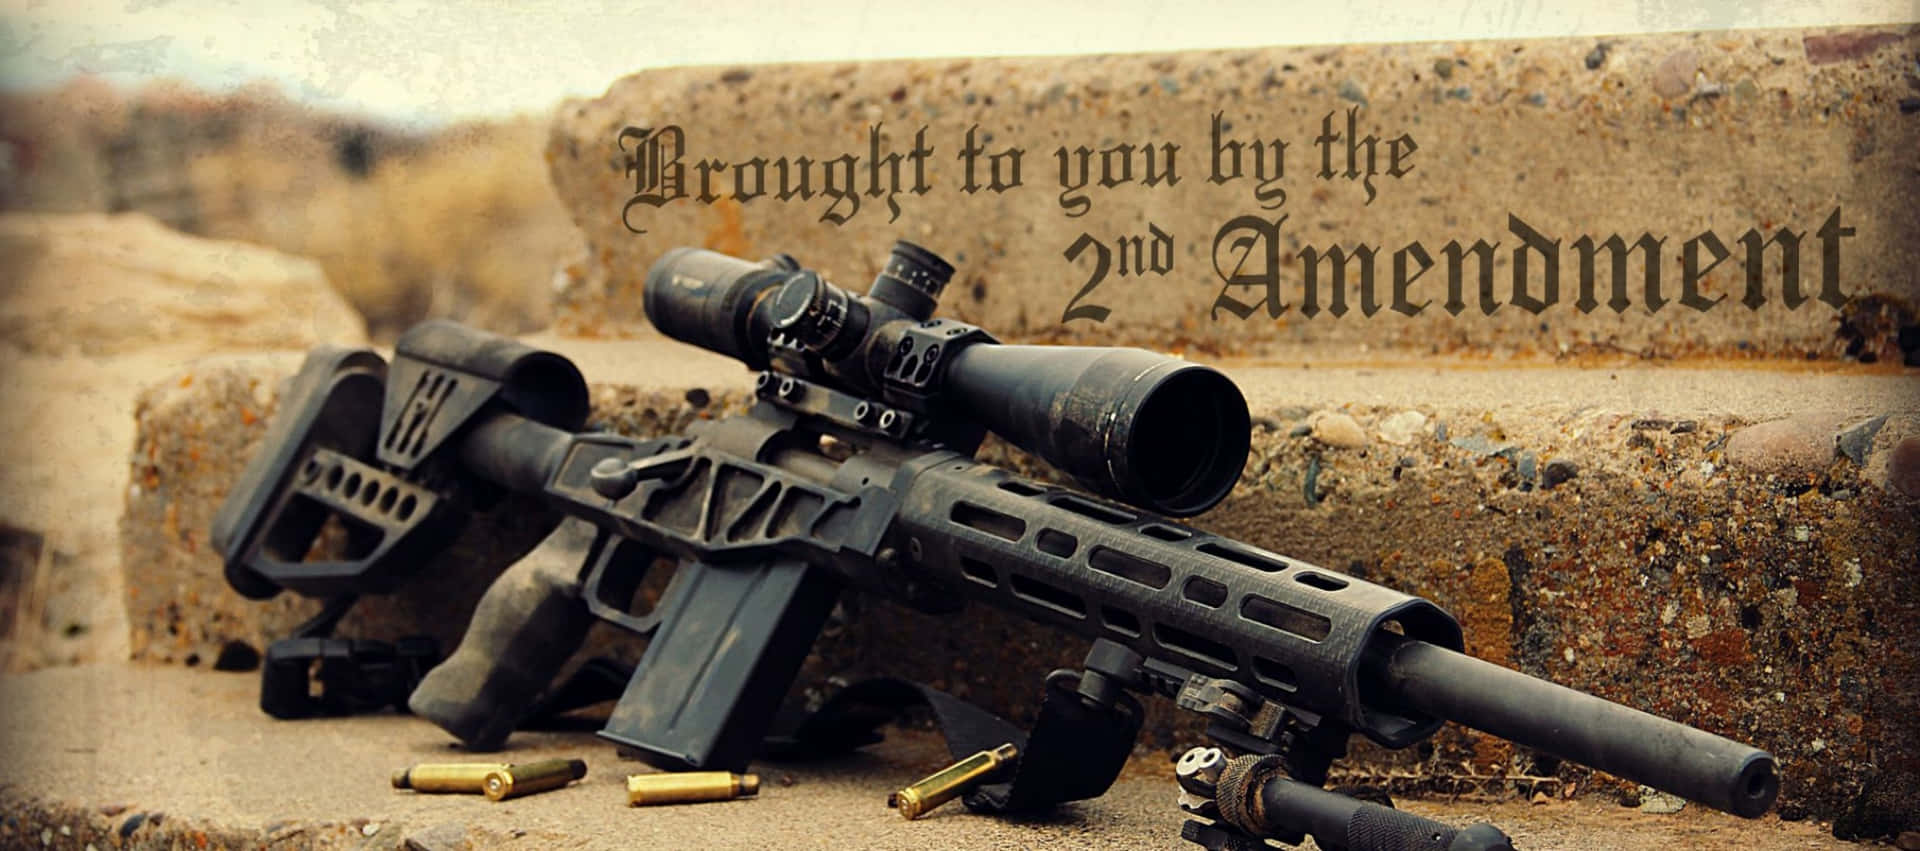 Sniper Machine Gun 2nd Amendment Wallpaper